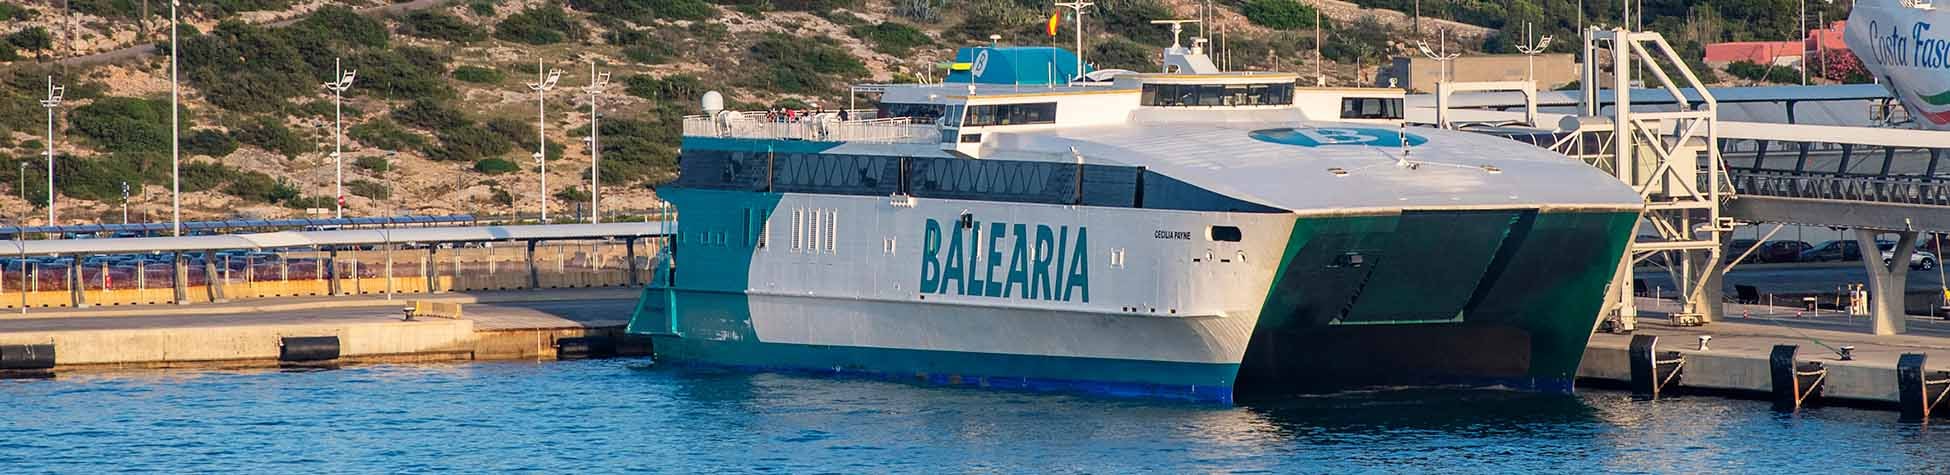 Imagen recurso del puerto de destino Mallorca (Alcudia) para la ruta en ferry Barcelona - Mallorca (Alcudia)